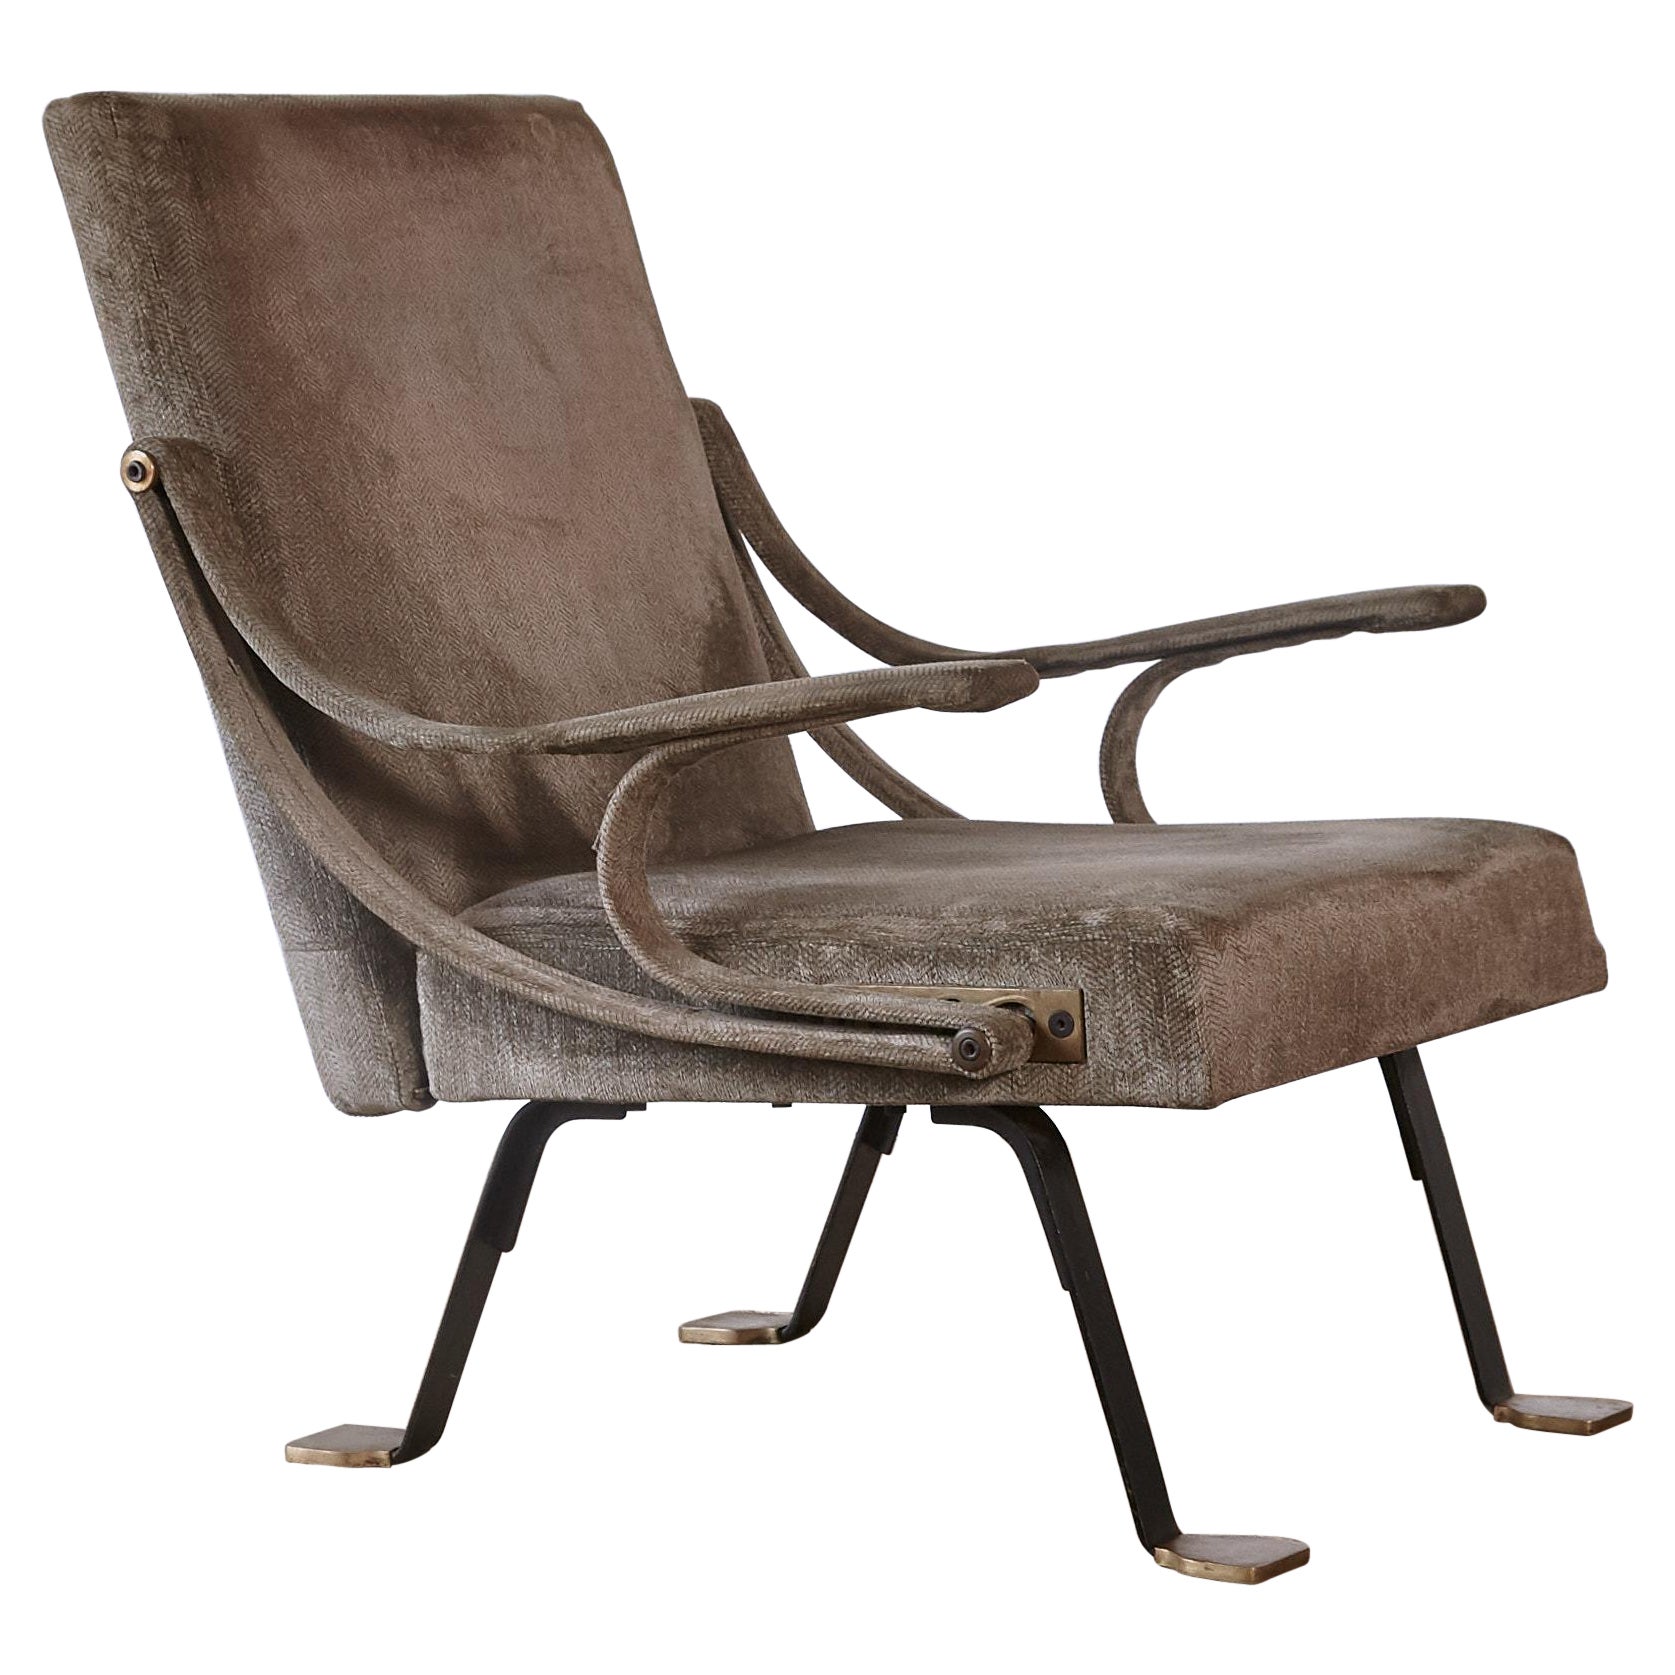 Original Ignazio Gardella Reclining Digamma Chair, 1960s, Italy